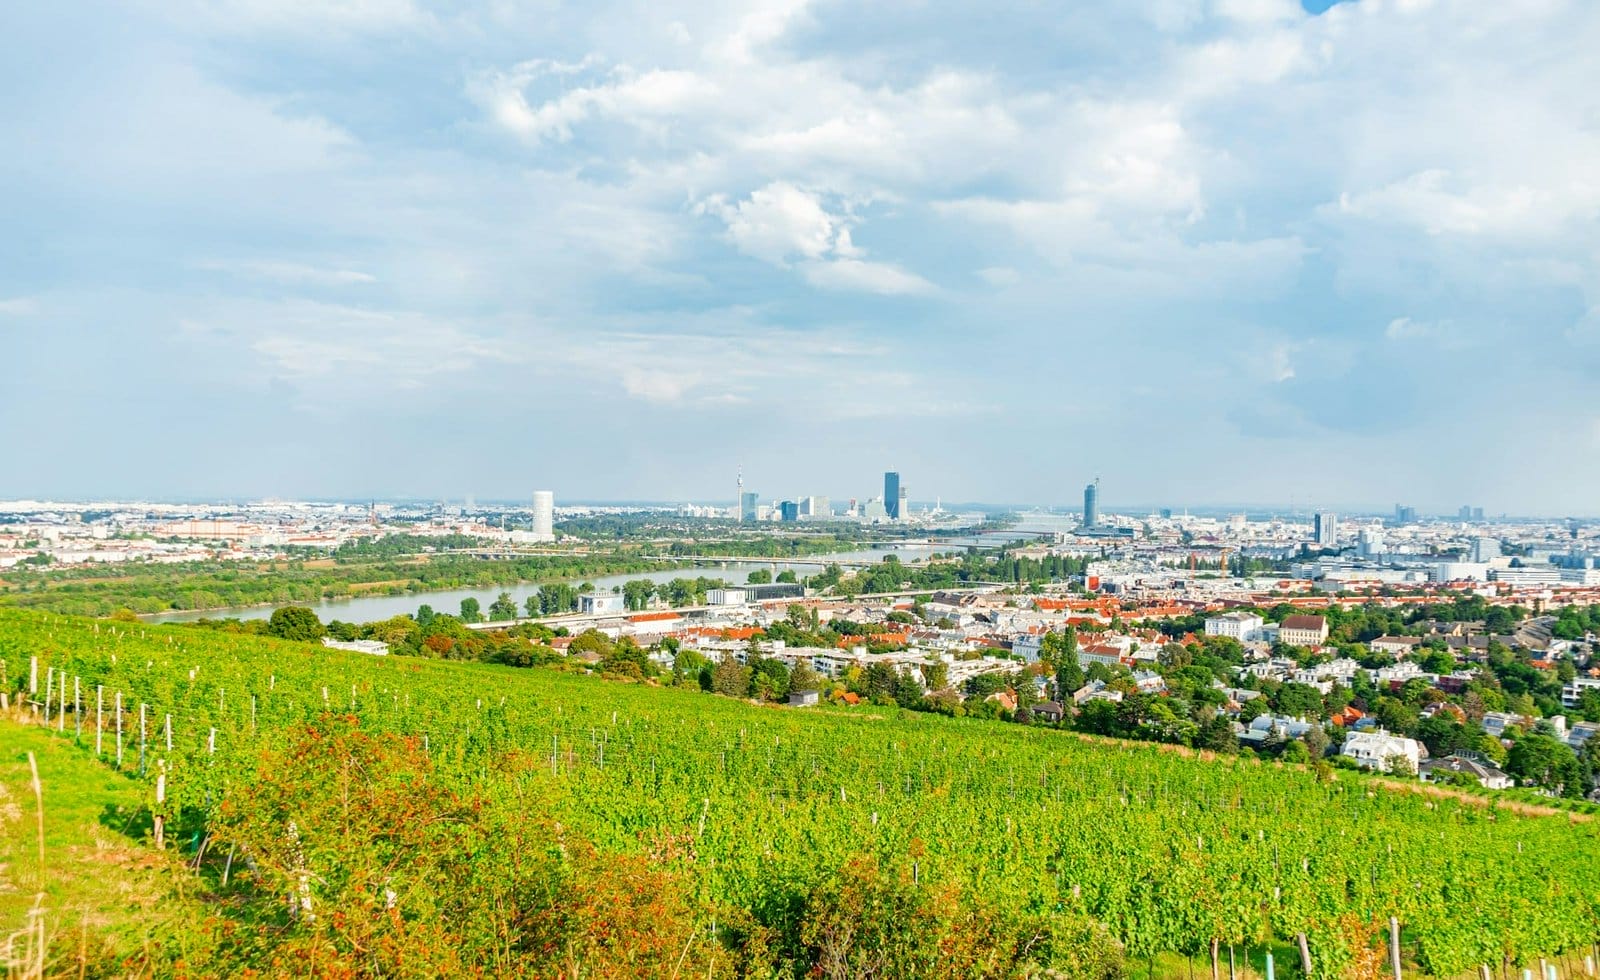 Vineyard rows on a hill in Vienna Austria Nusserg area, View on Vienna City